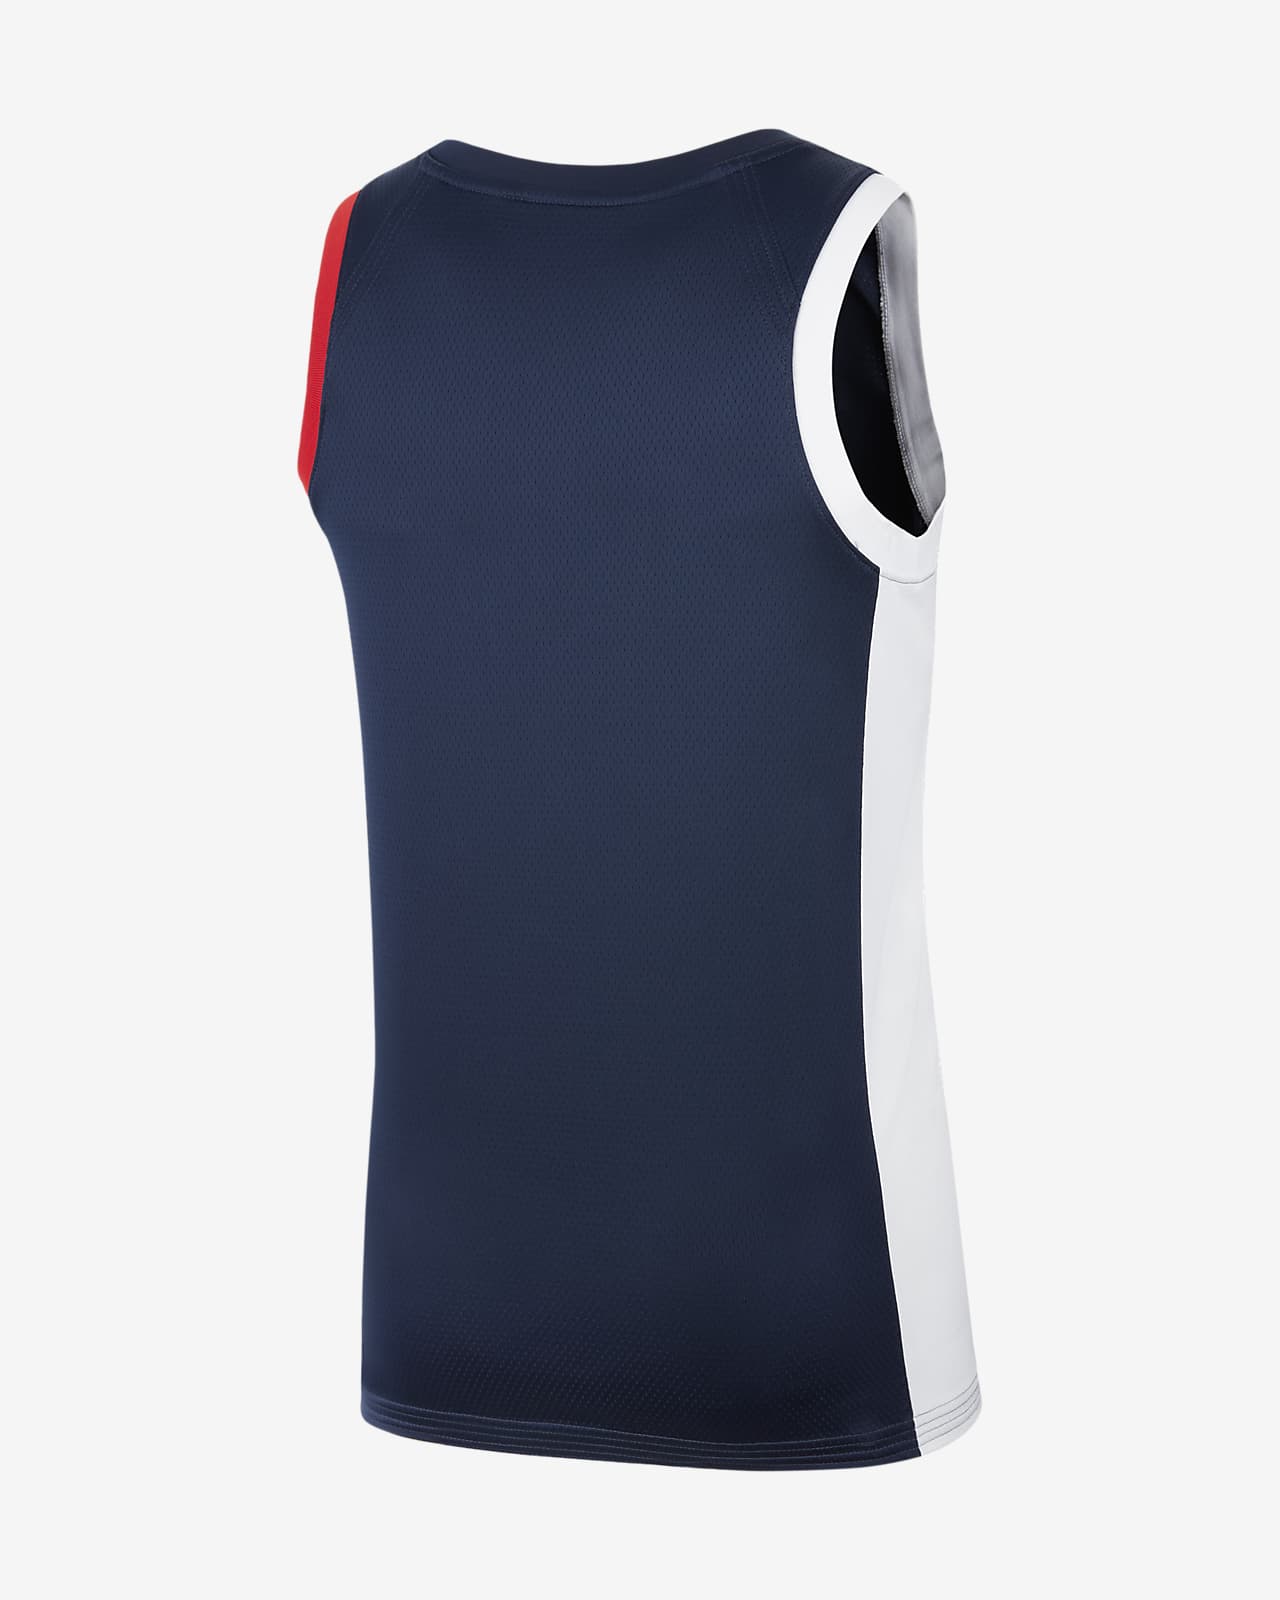 Segunda Francia Jordan Limited Camiseta de baloncesto - Hombre. Nike